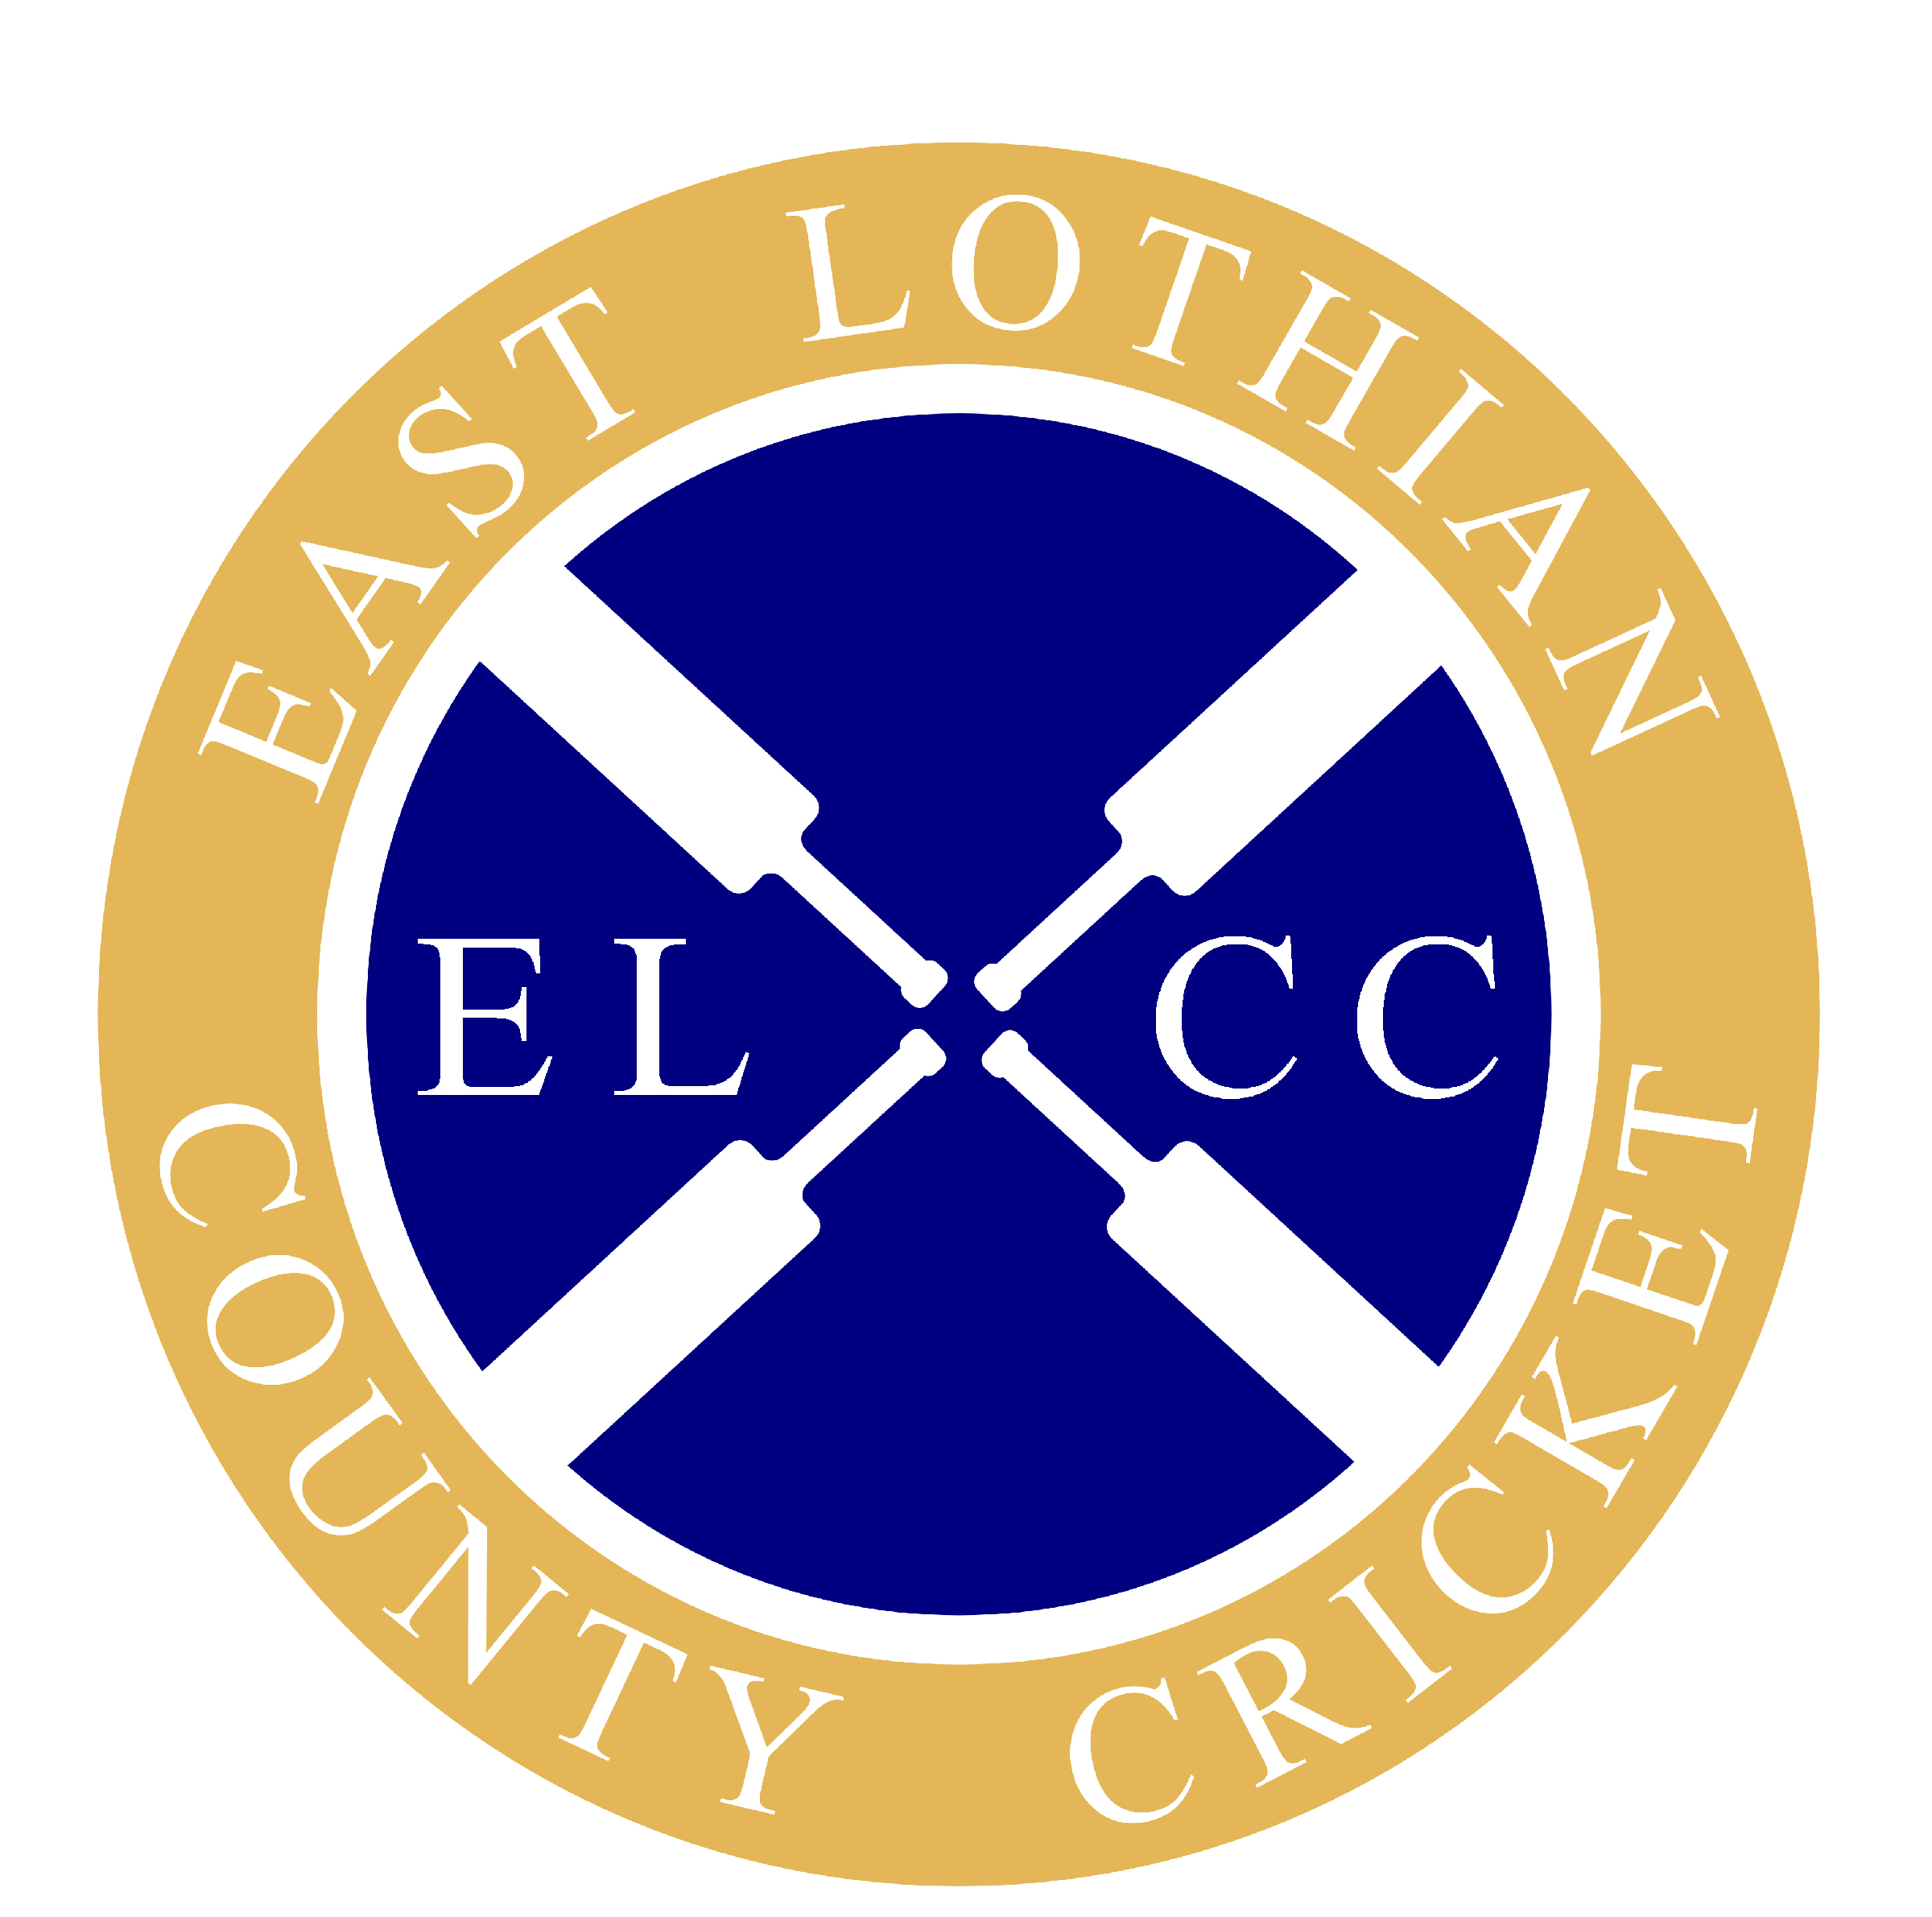 East Lothian County Cricket